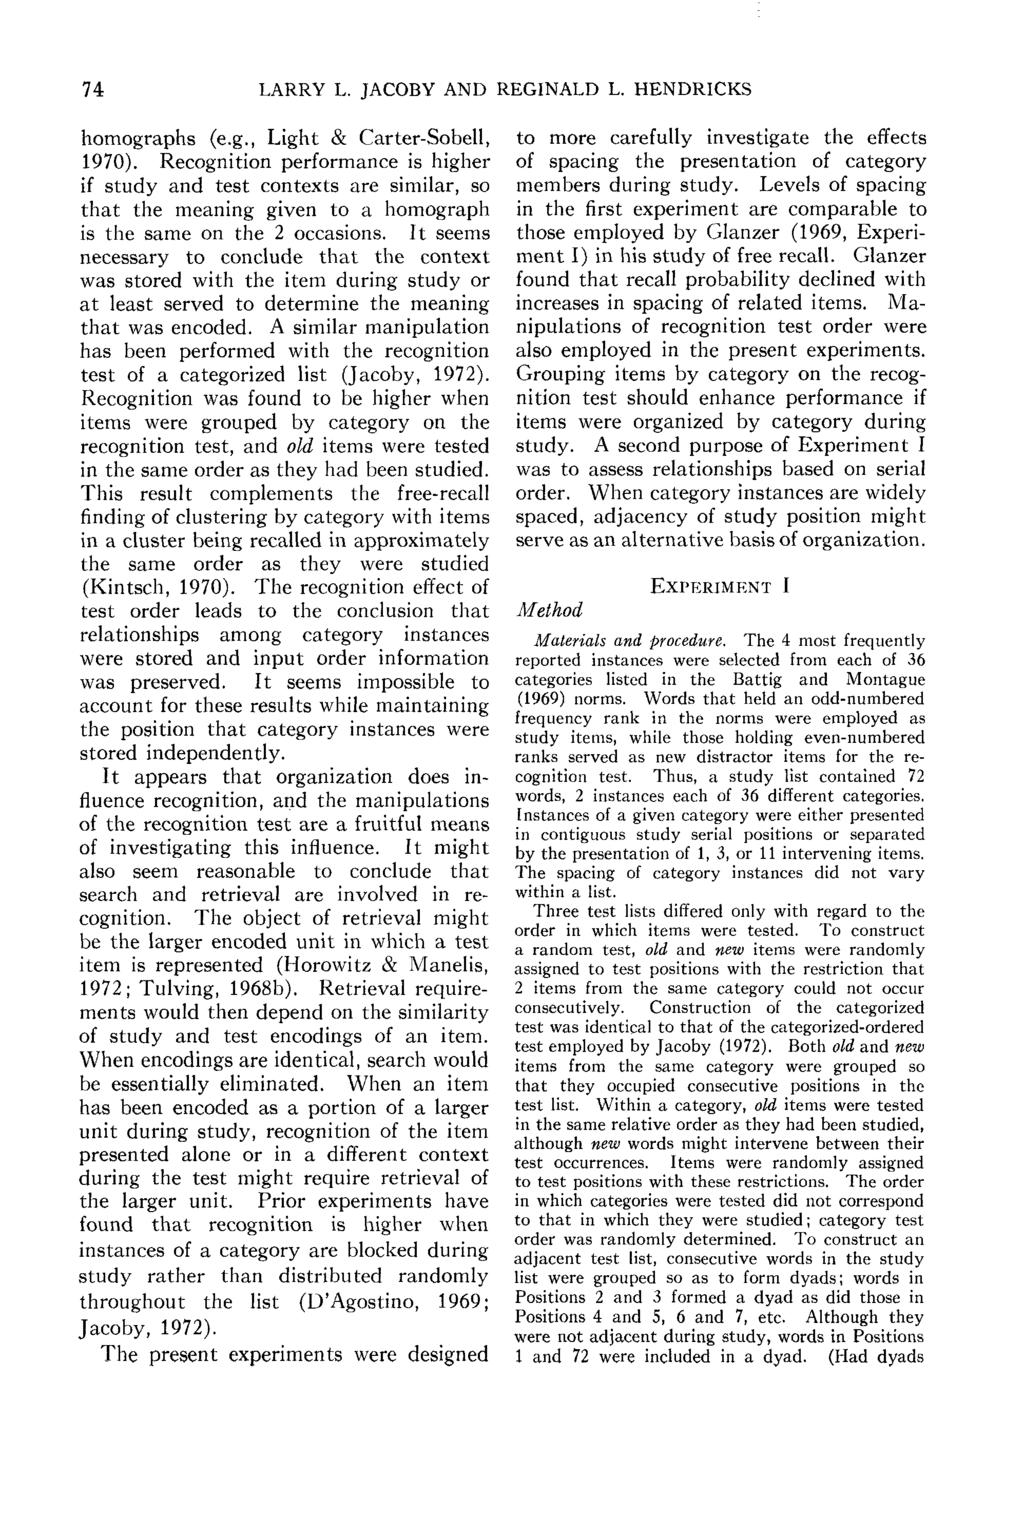 74 LARRY L. JACOBY AND REGINALD L. HENDRICKS homographs (e.g., Light & Carter-Sobell, 1970).